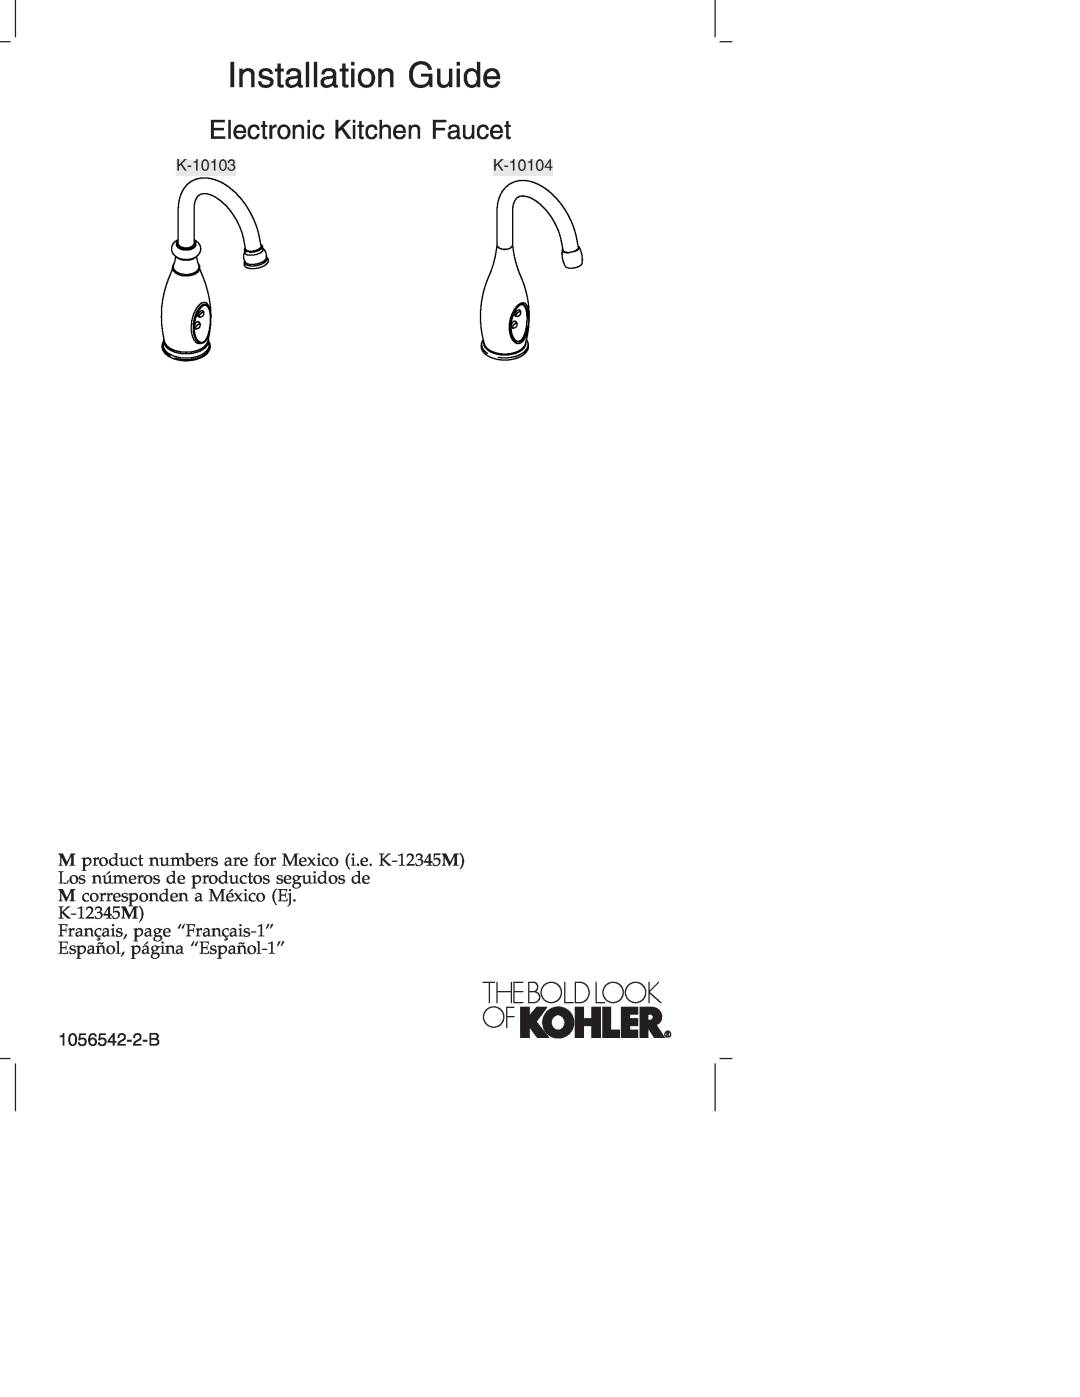 Kohler K-10103, K-10104 manual Installation Guide, Electronic Kitchen Faucet 